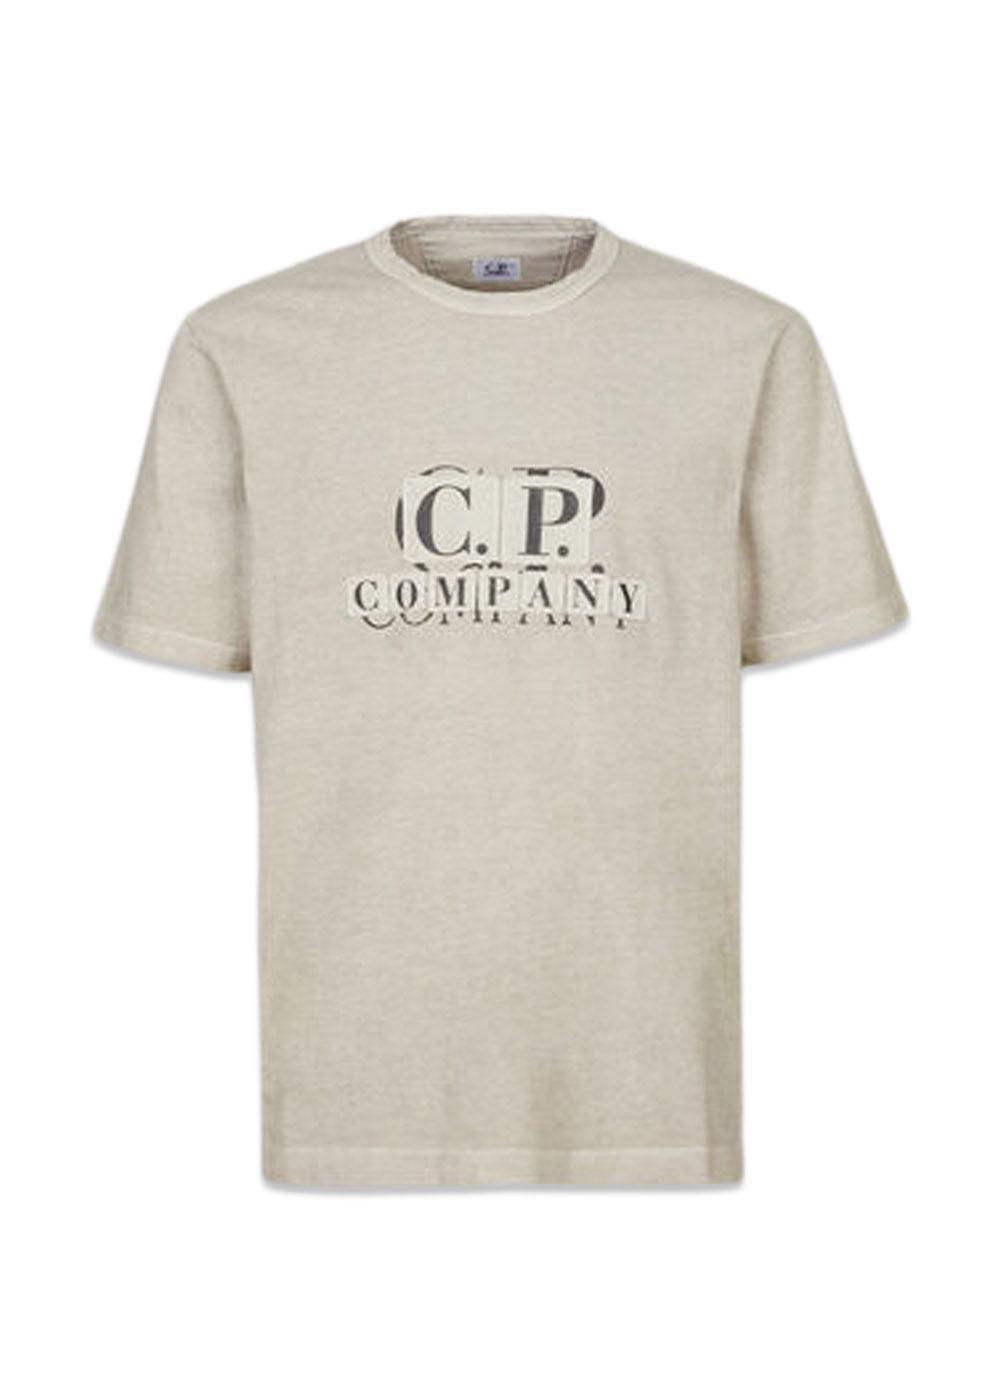 C.P. Companys T-Shirt - Short Sleeve 1020 Jersey - Flint Grey. Køb t-shirts her.